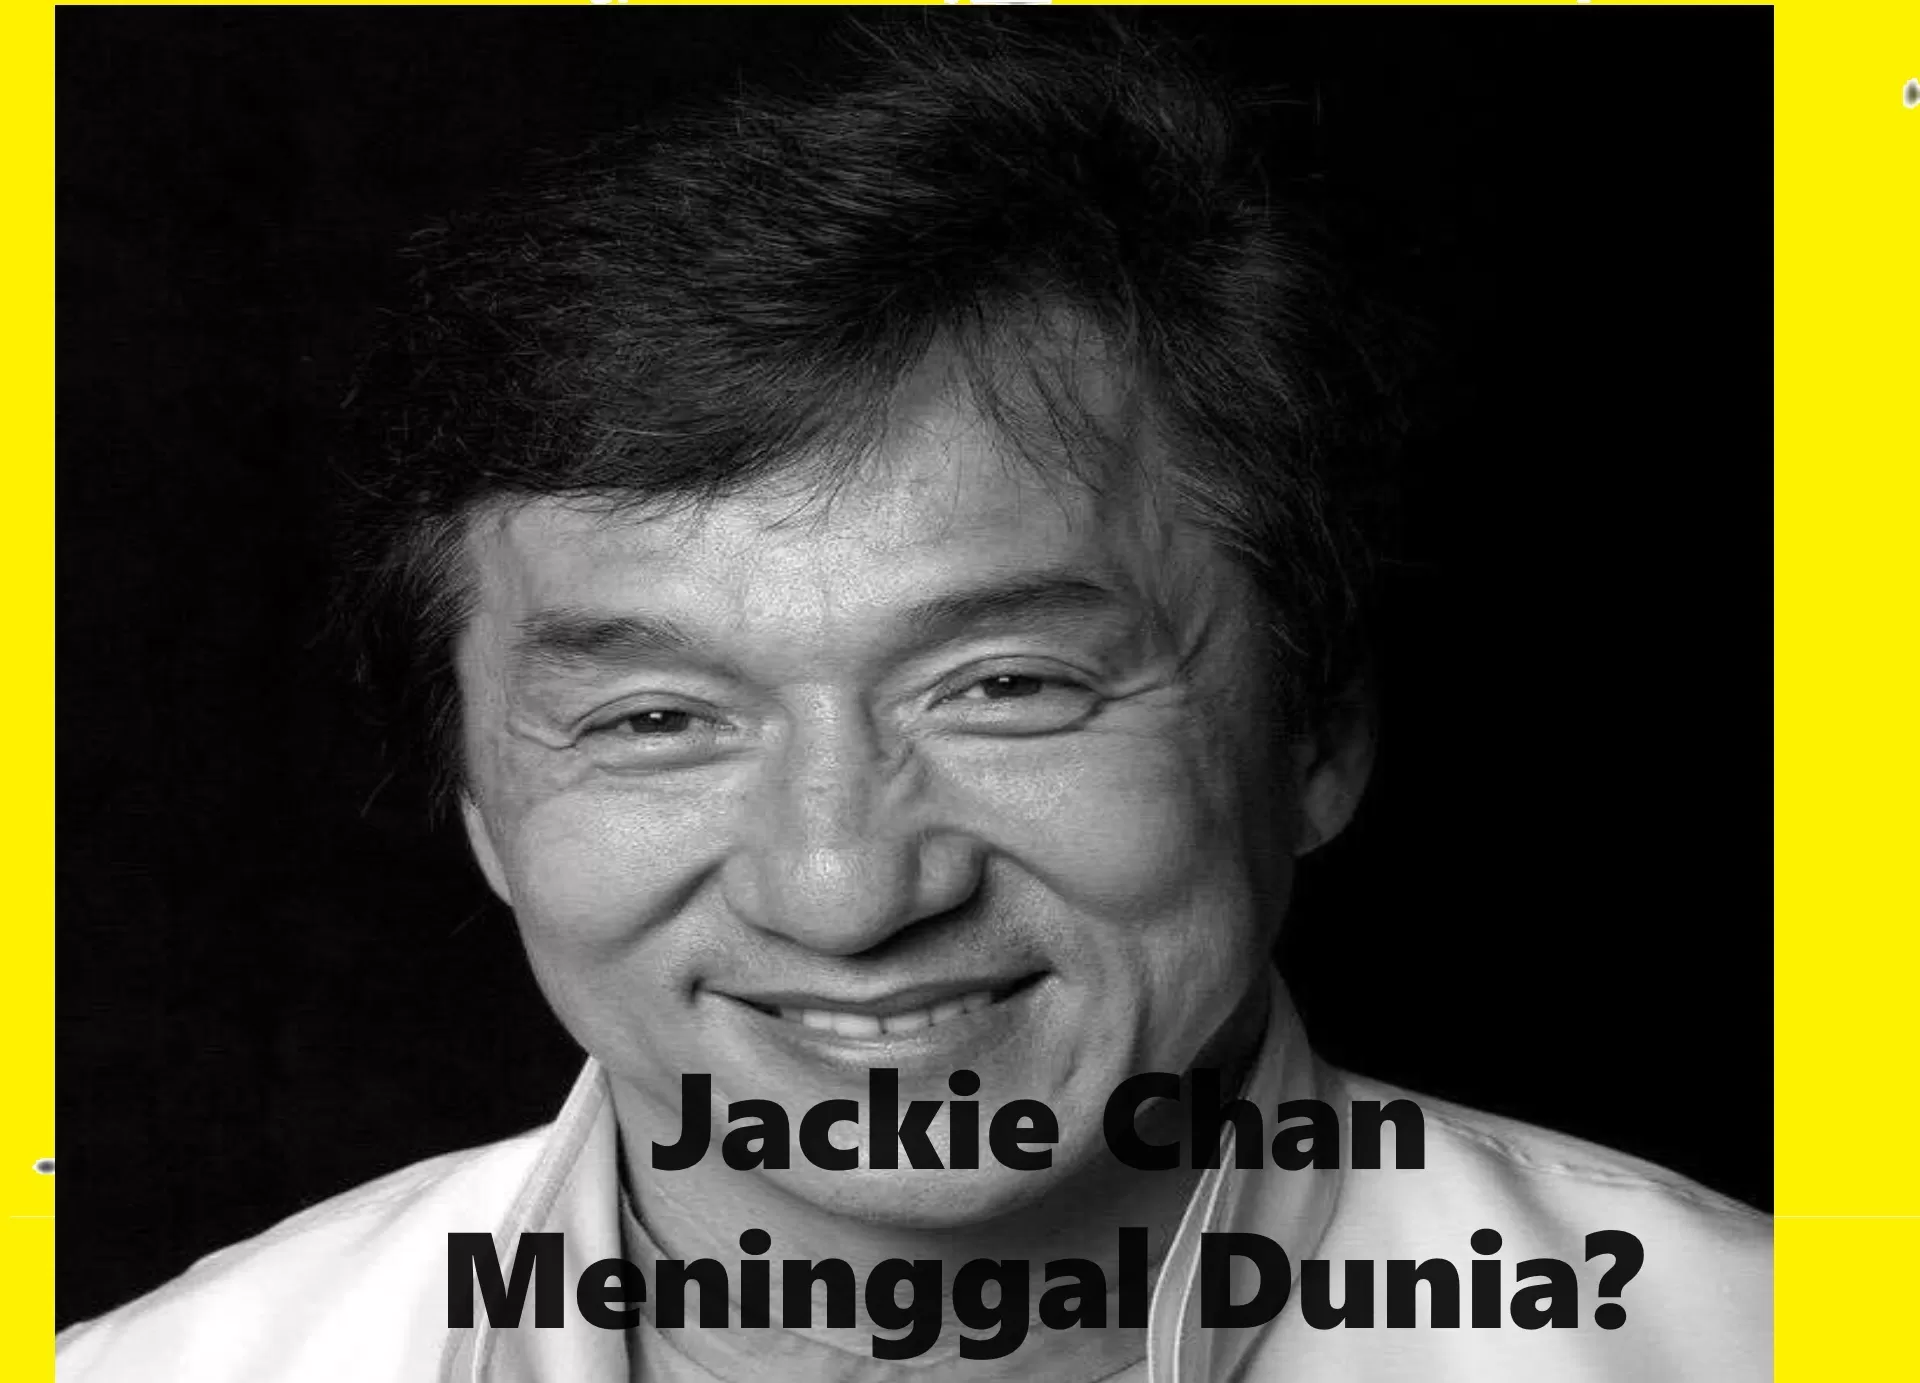 Benarkah Jackie Chan Meninggal Dunia? Unggahan IG Sang Aktor Banjir Komentar Netizen